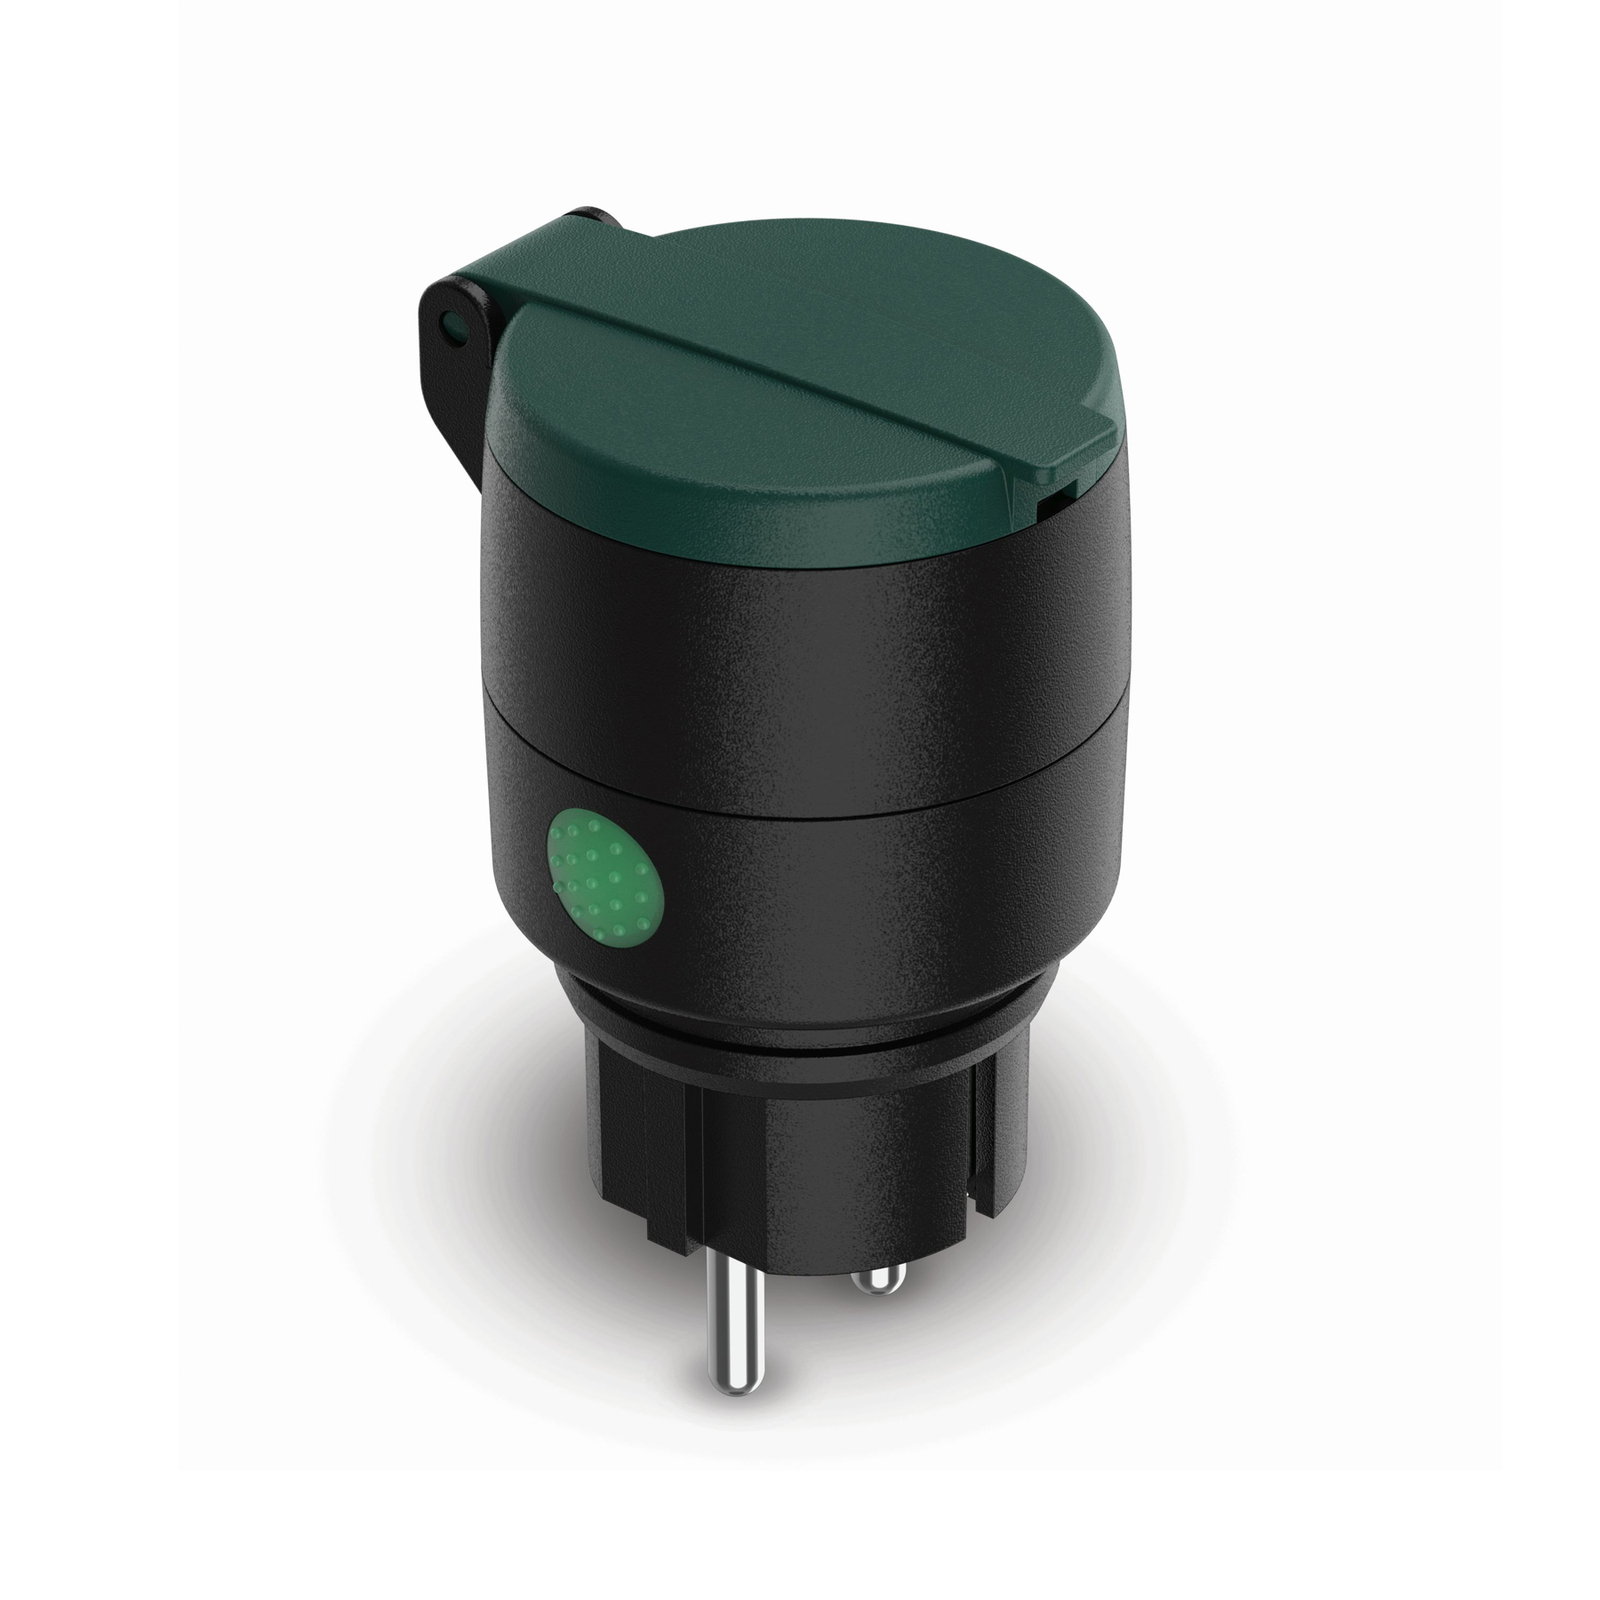 Innr Outdoor Smart Plug Steckdose, IP44, Kunststoff, schwarz